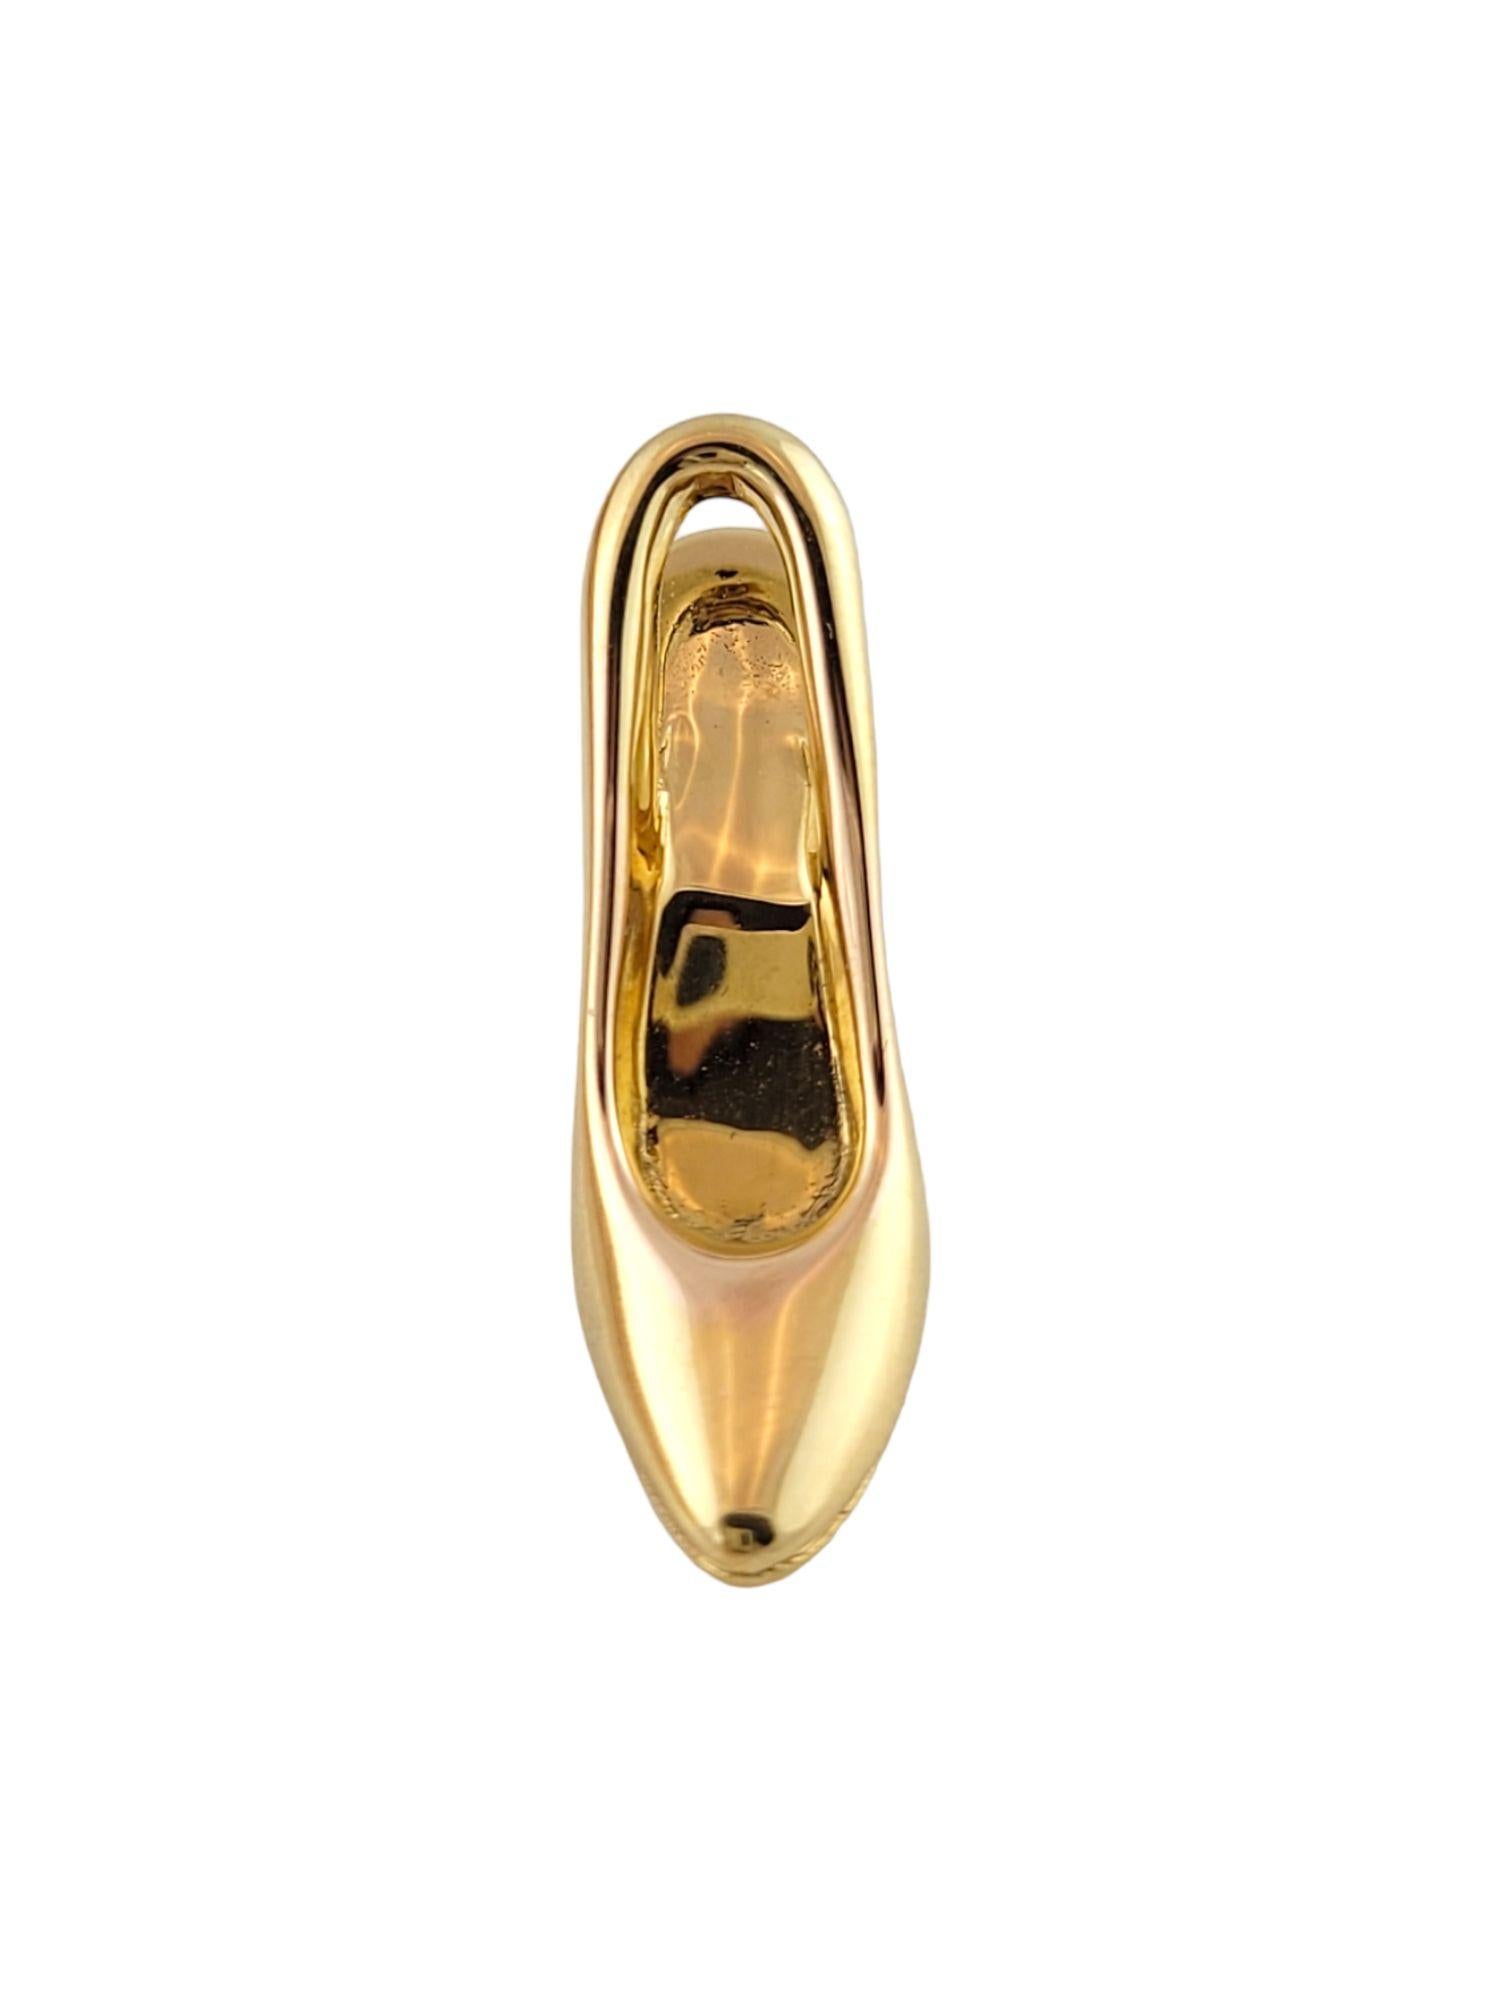 Vintage 14K Yellow Gold Diamond High Heel Stiletto Pendant

5 sparkling, single cut diamonds embedded in a 14K yellow gold high heel pendant!

Diamond weight: .03 cts

Diamond clarity: SI1

Diamond color: I

Size: 17mm X 22mm X 8.5mm

Weight: 1.62